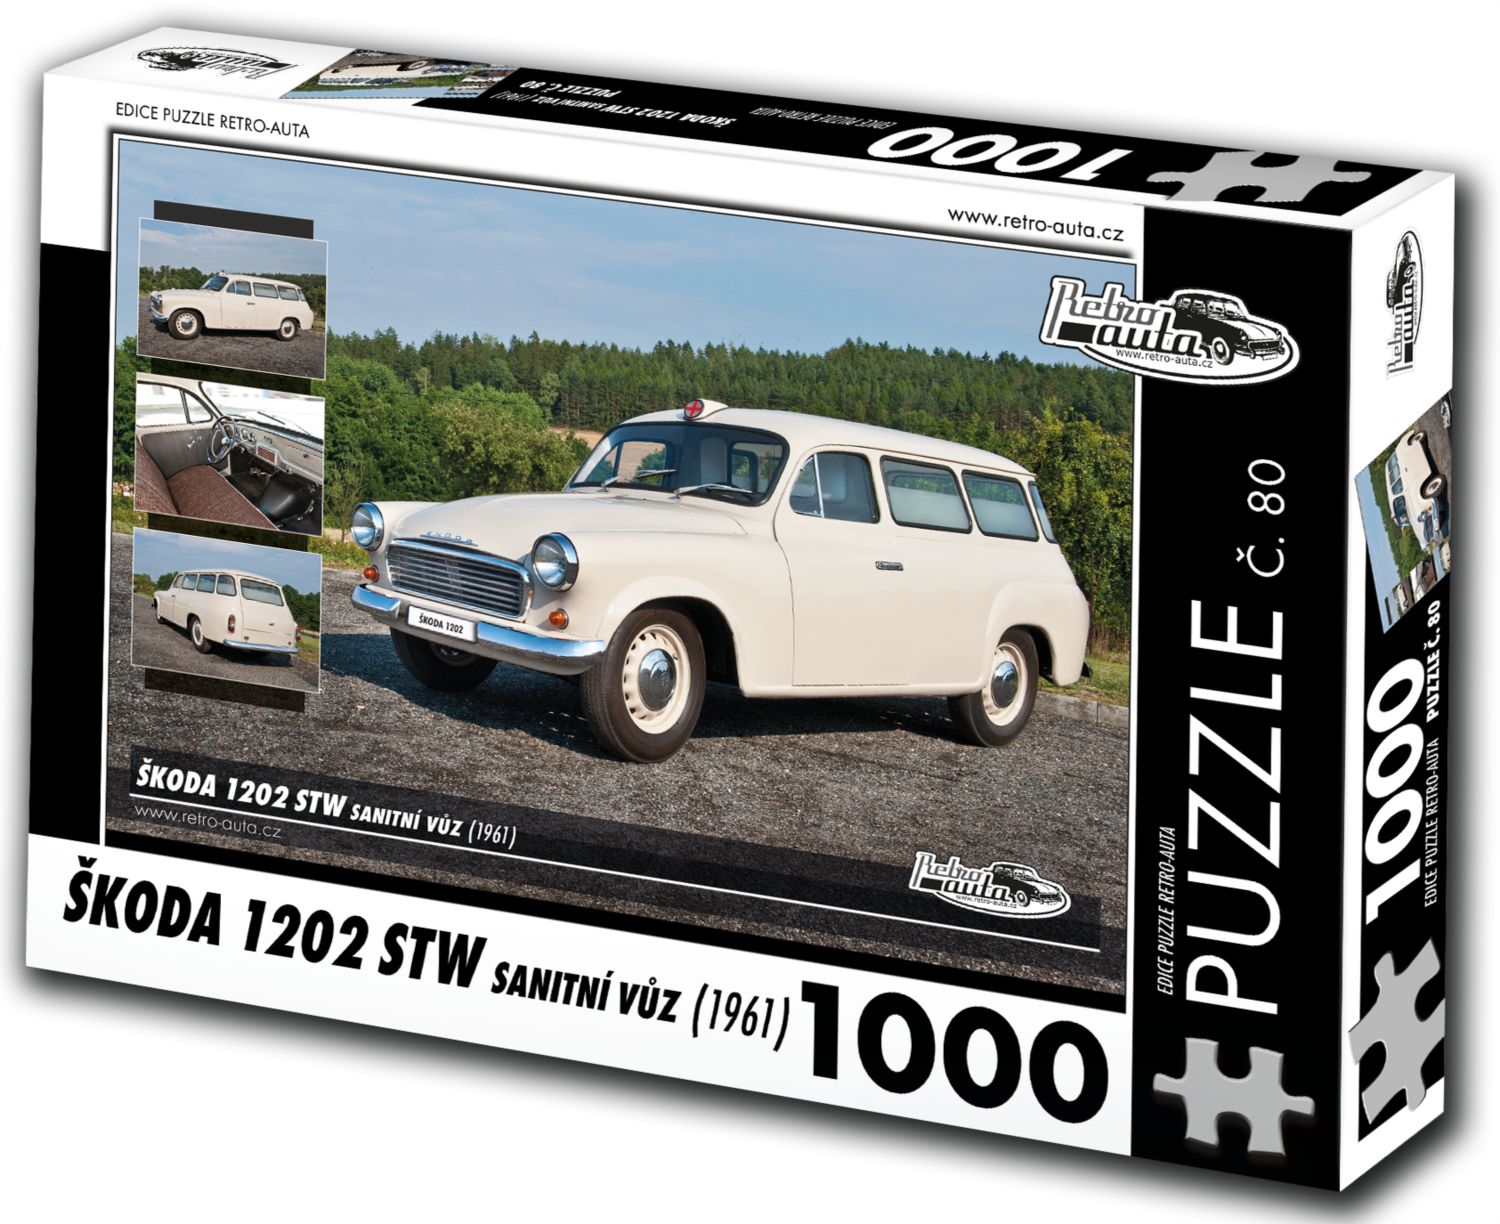 RETRO-AUTA Puzzle č. 80 Škoda 1202 STW sanitní vůz (1961) 1000 dílků - obrázek 1